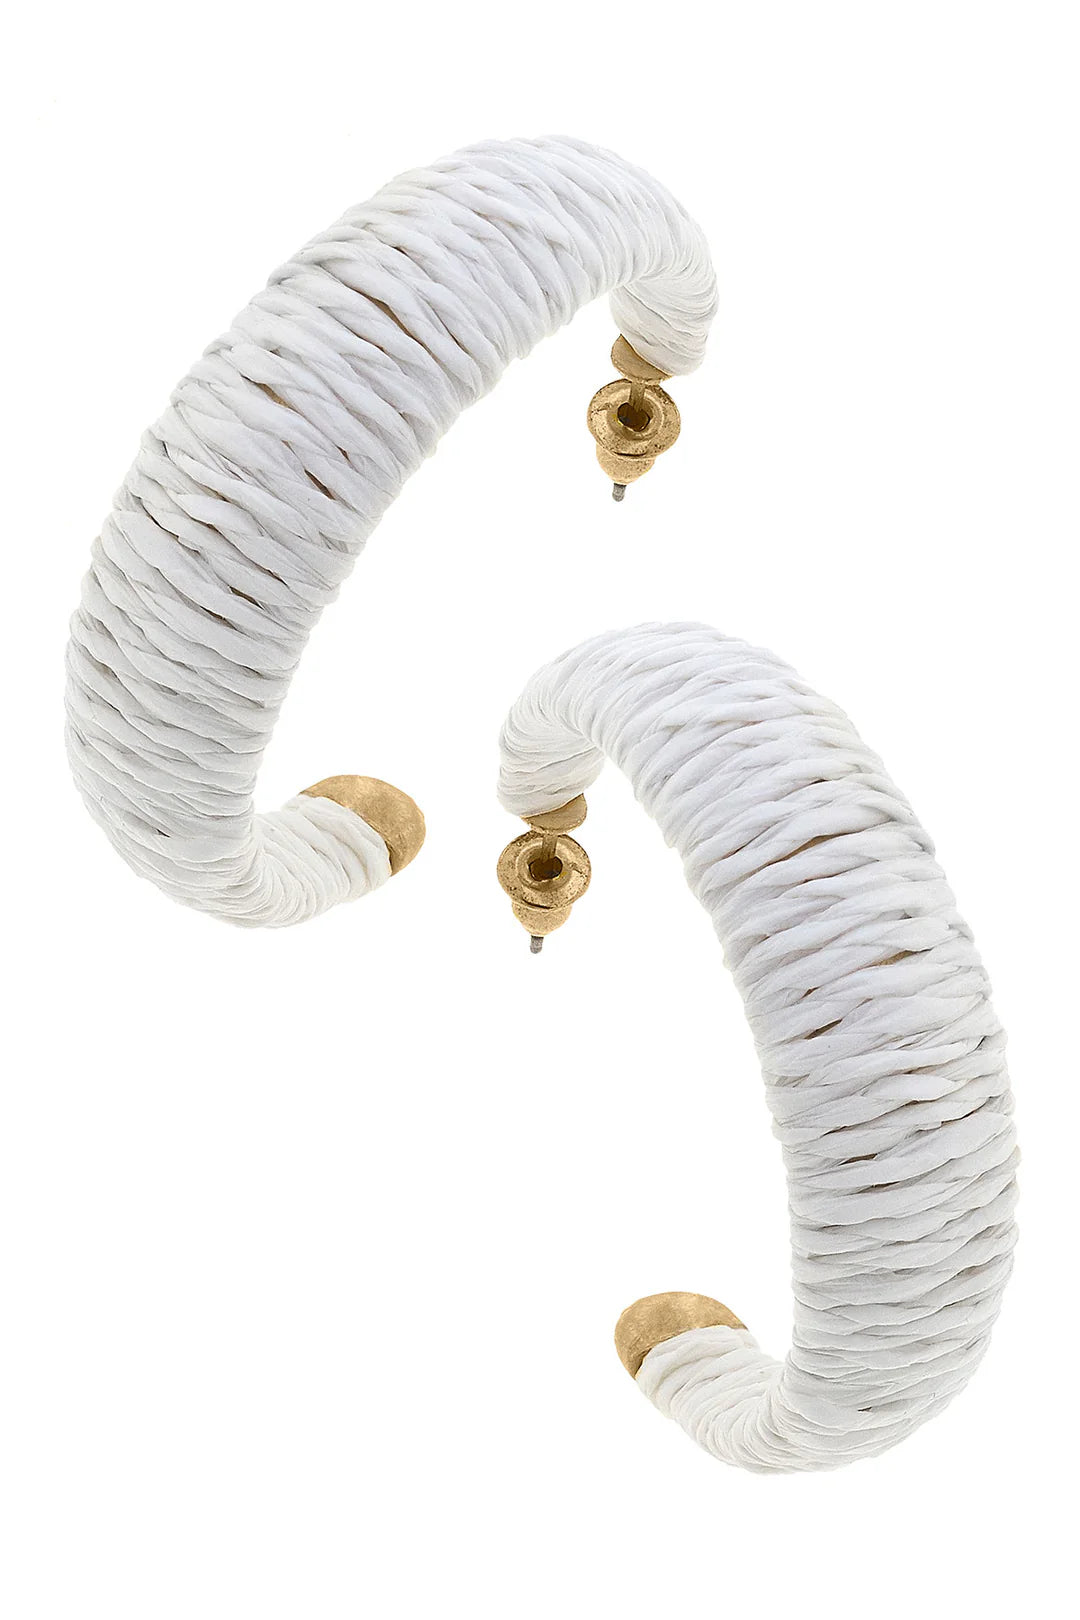 Cancun Raffia Hoop Earrings  - (natural or white)